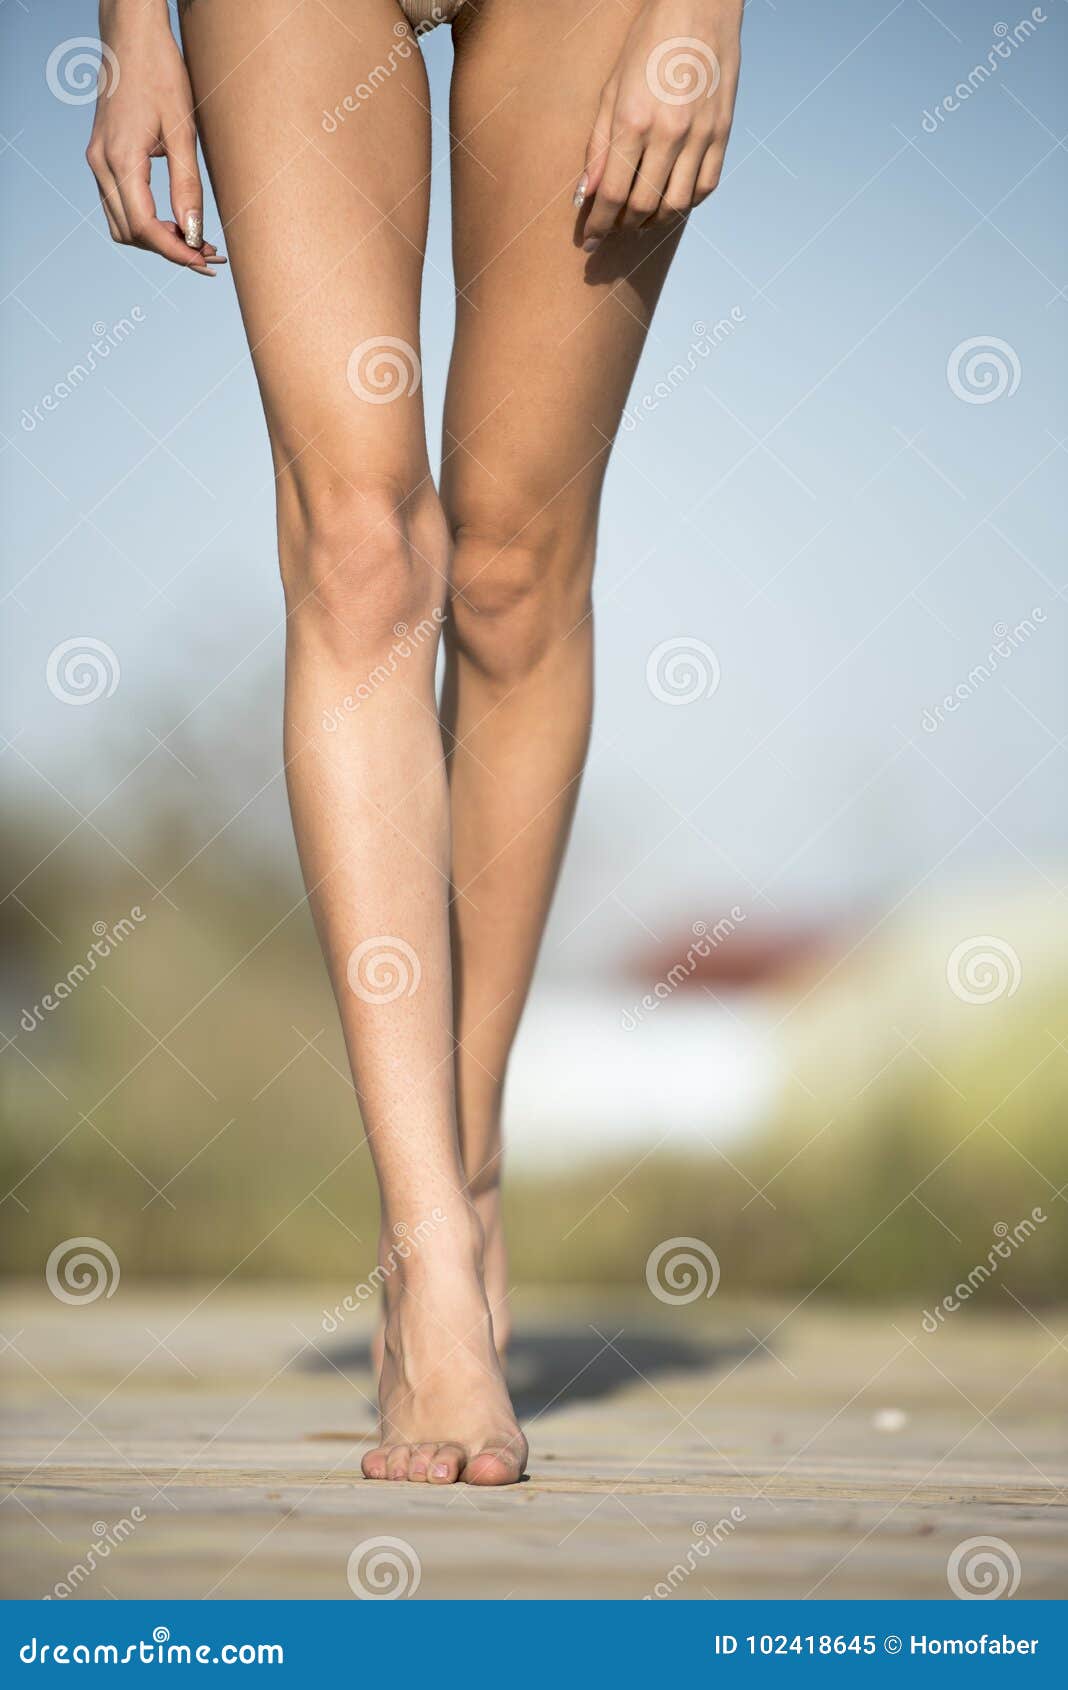 Slim Female Legs Wearing Bikini and Walking Stock Image - Image of